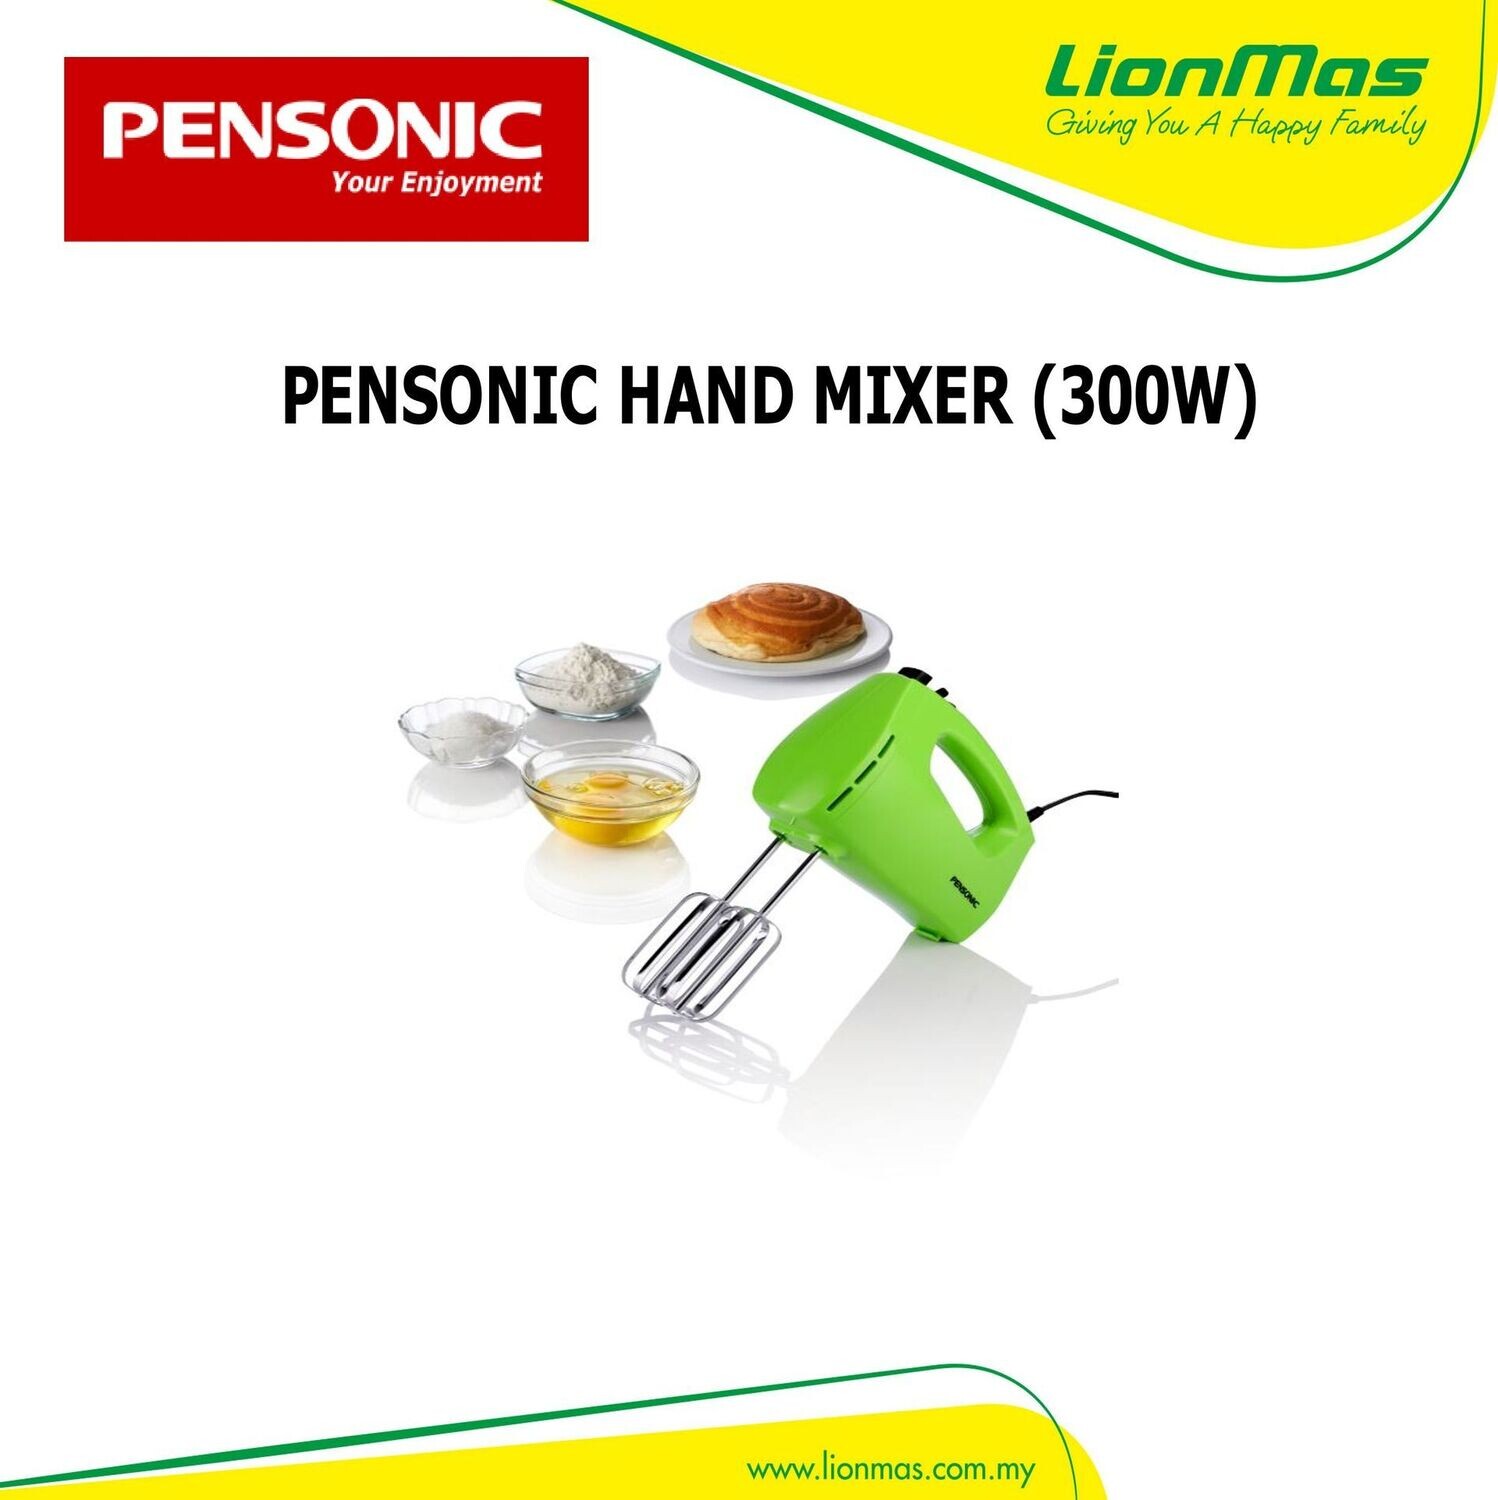 PENSONIC HAND MIXER (300W) PM-116G